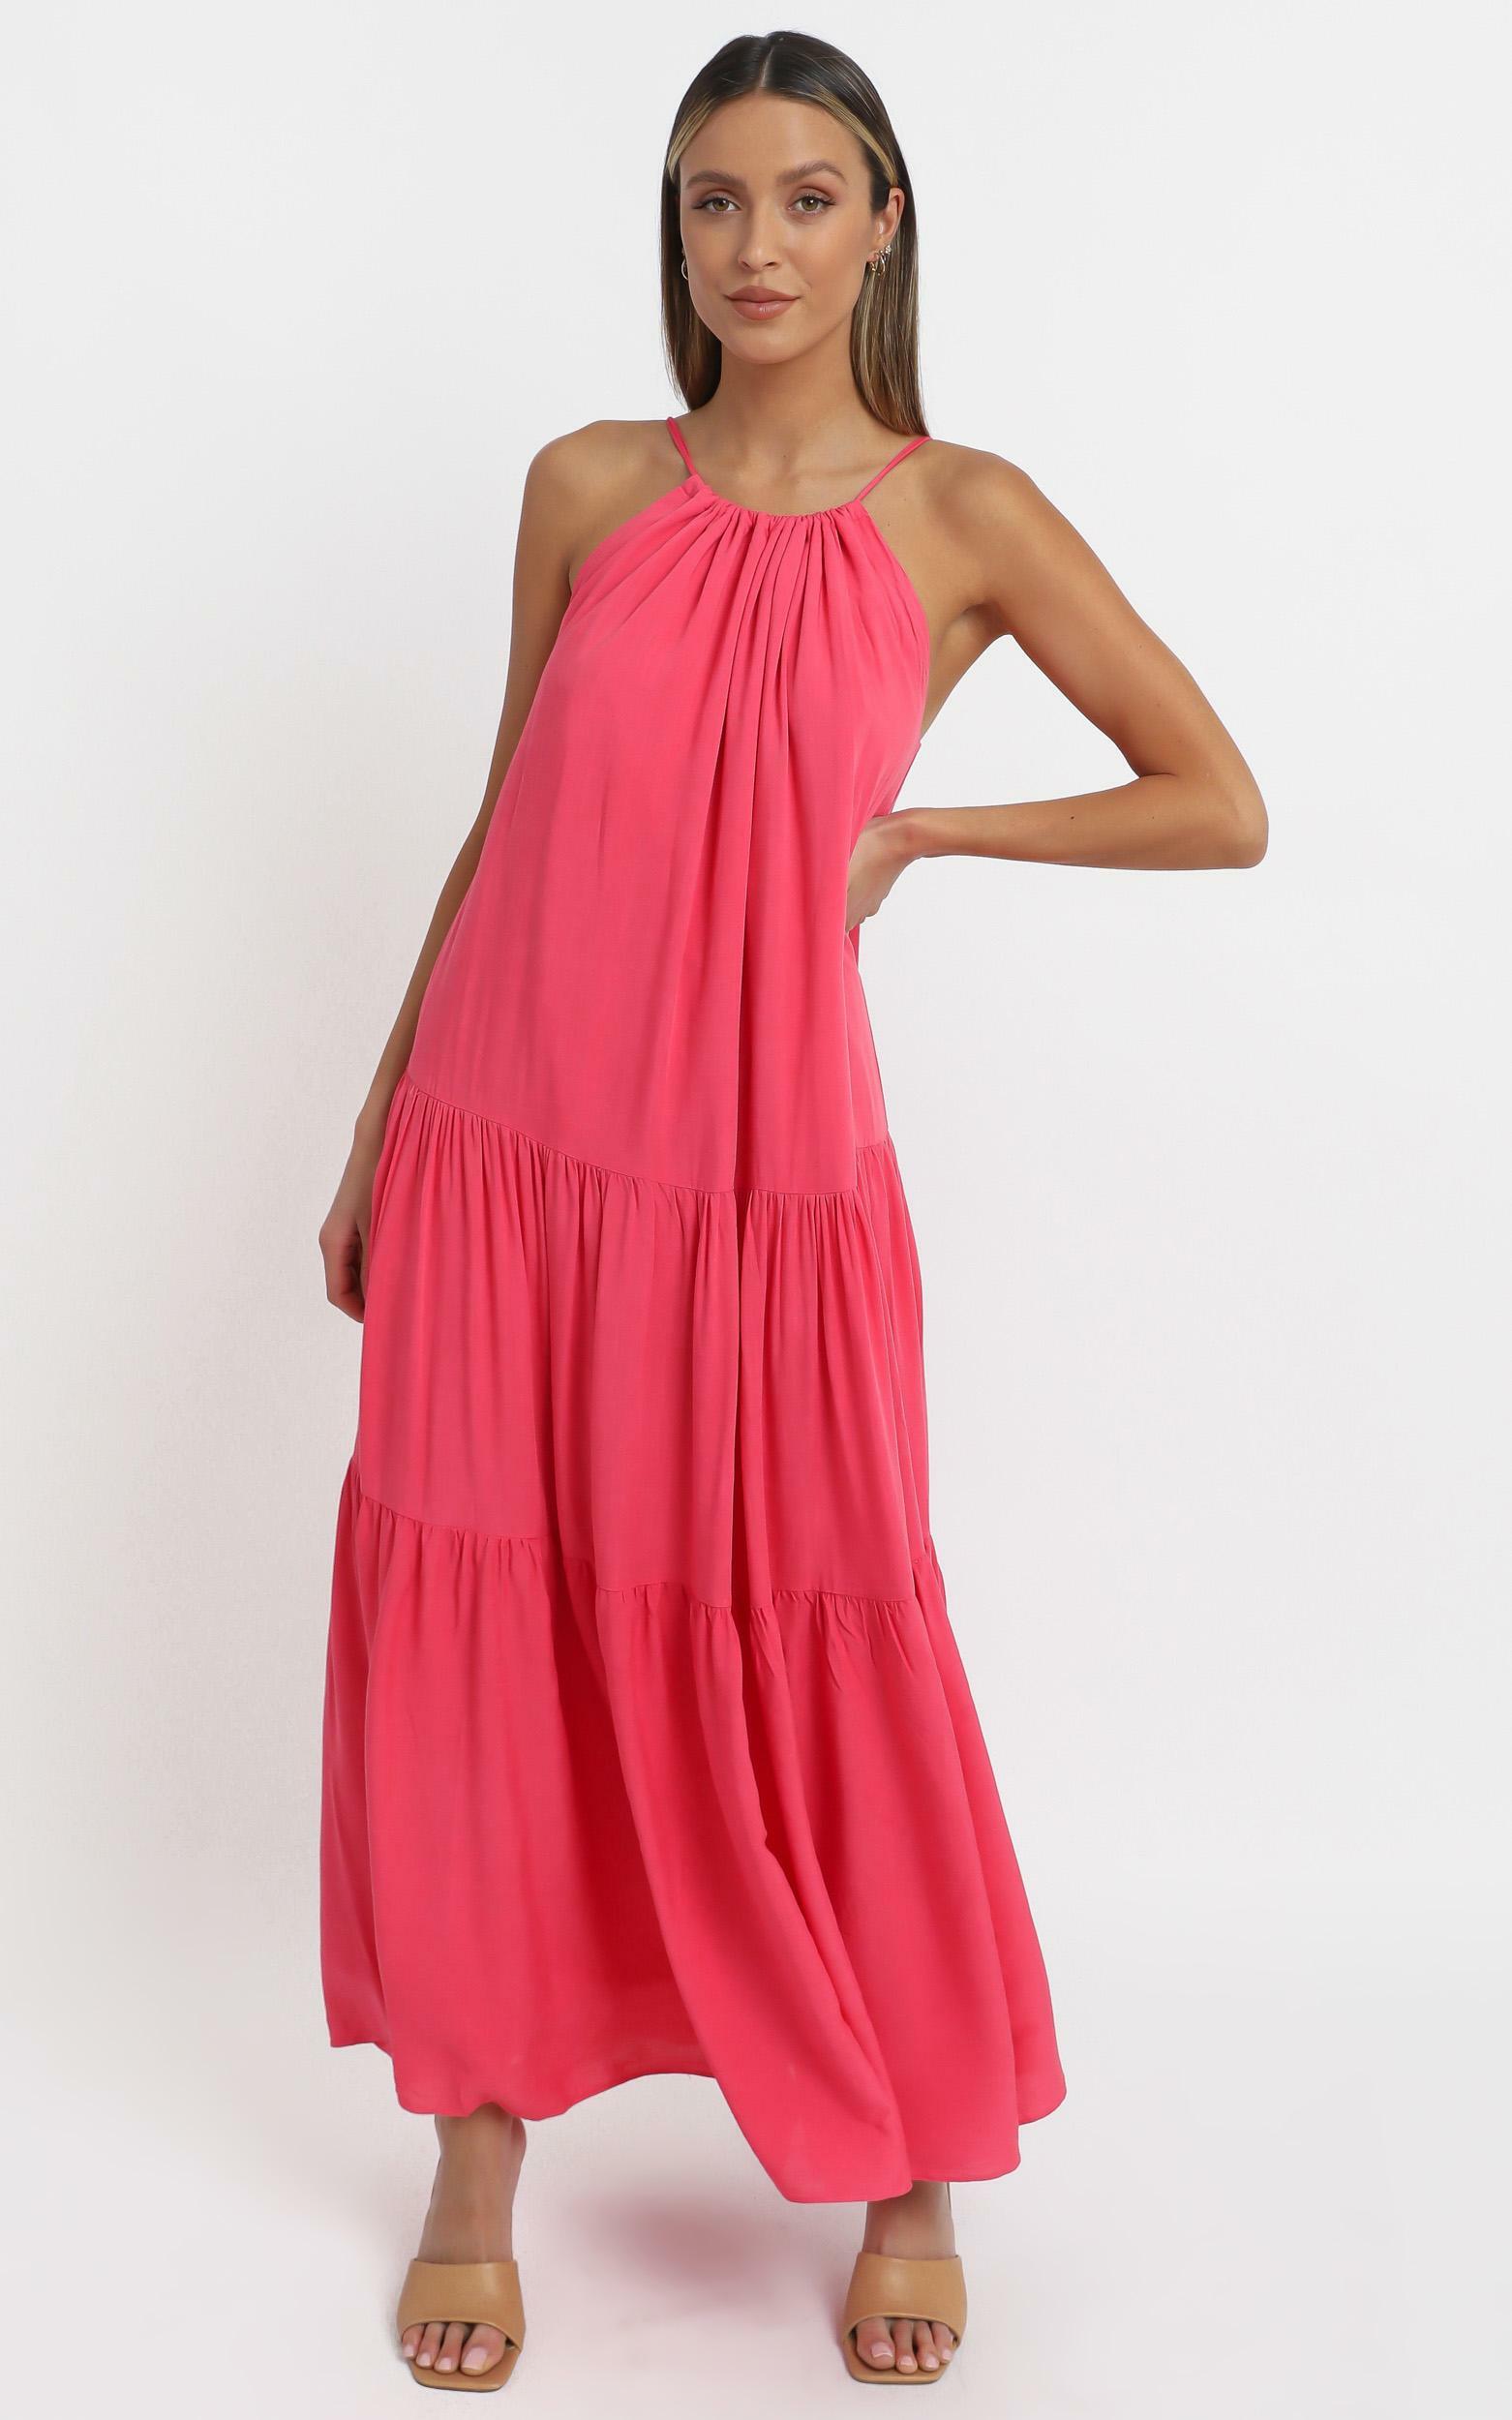 hot pink dress size 14